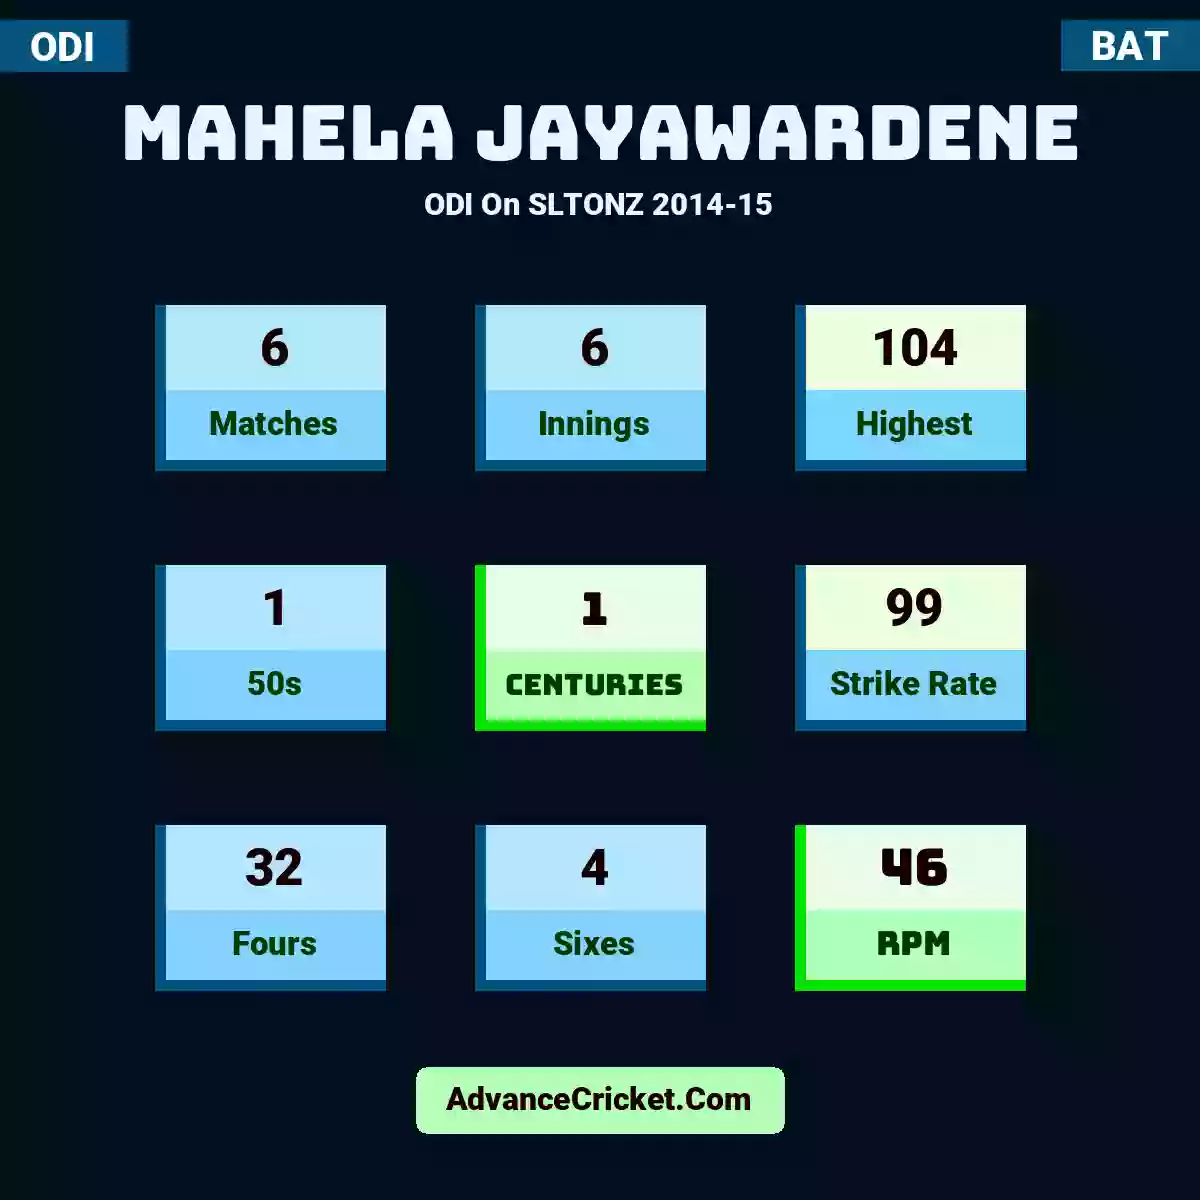 Mahela Jayawardene ODI  On SLTONZ 2014-15, Mahela Jayawardene played 6 matches, scored 104 runs as highest, 1 half-centuries, and 1 centuries, with a strike rate of 99. M.Jayawardene hit 32 fours and 4 sixes, with an RPM of 46.